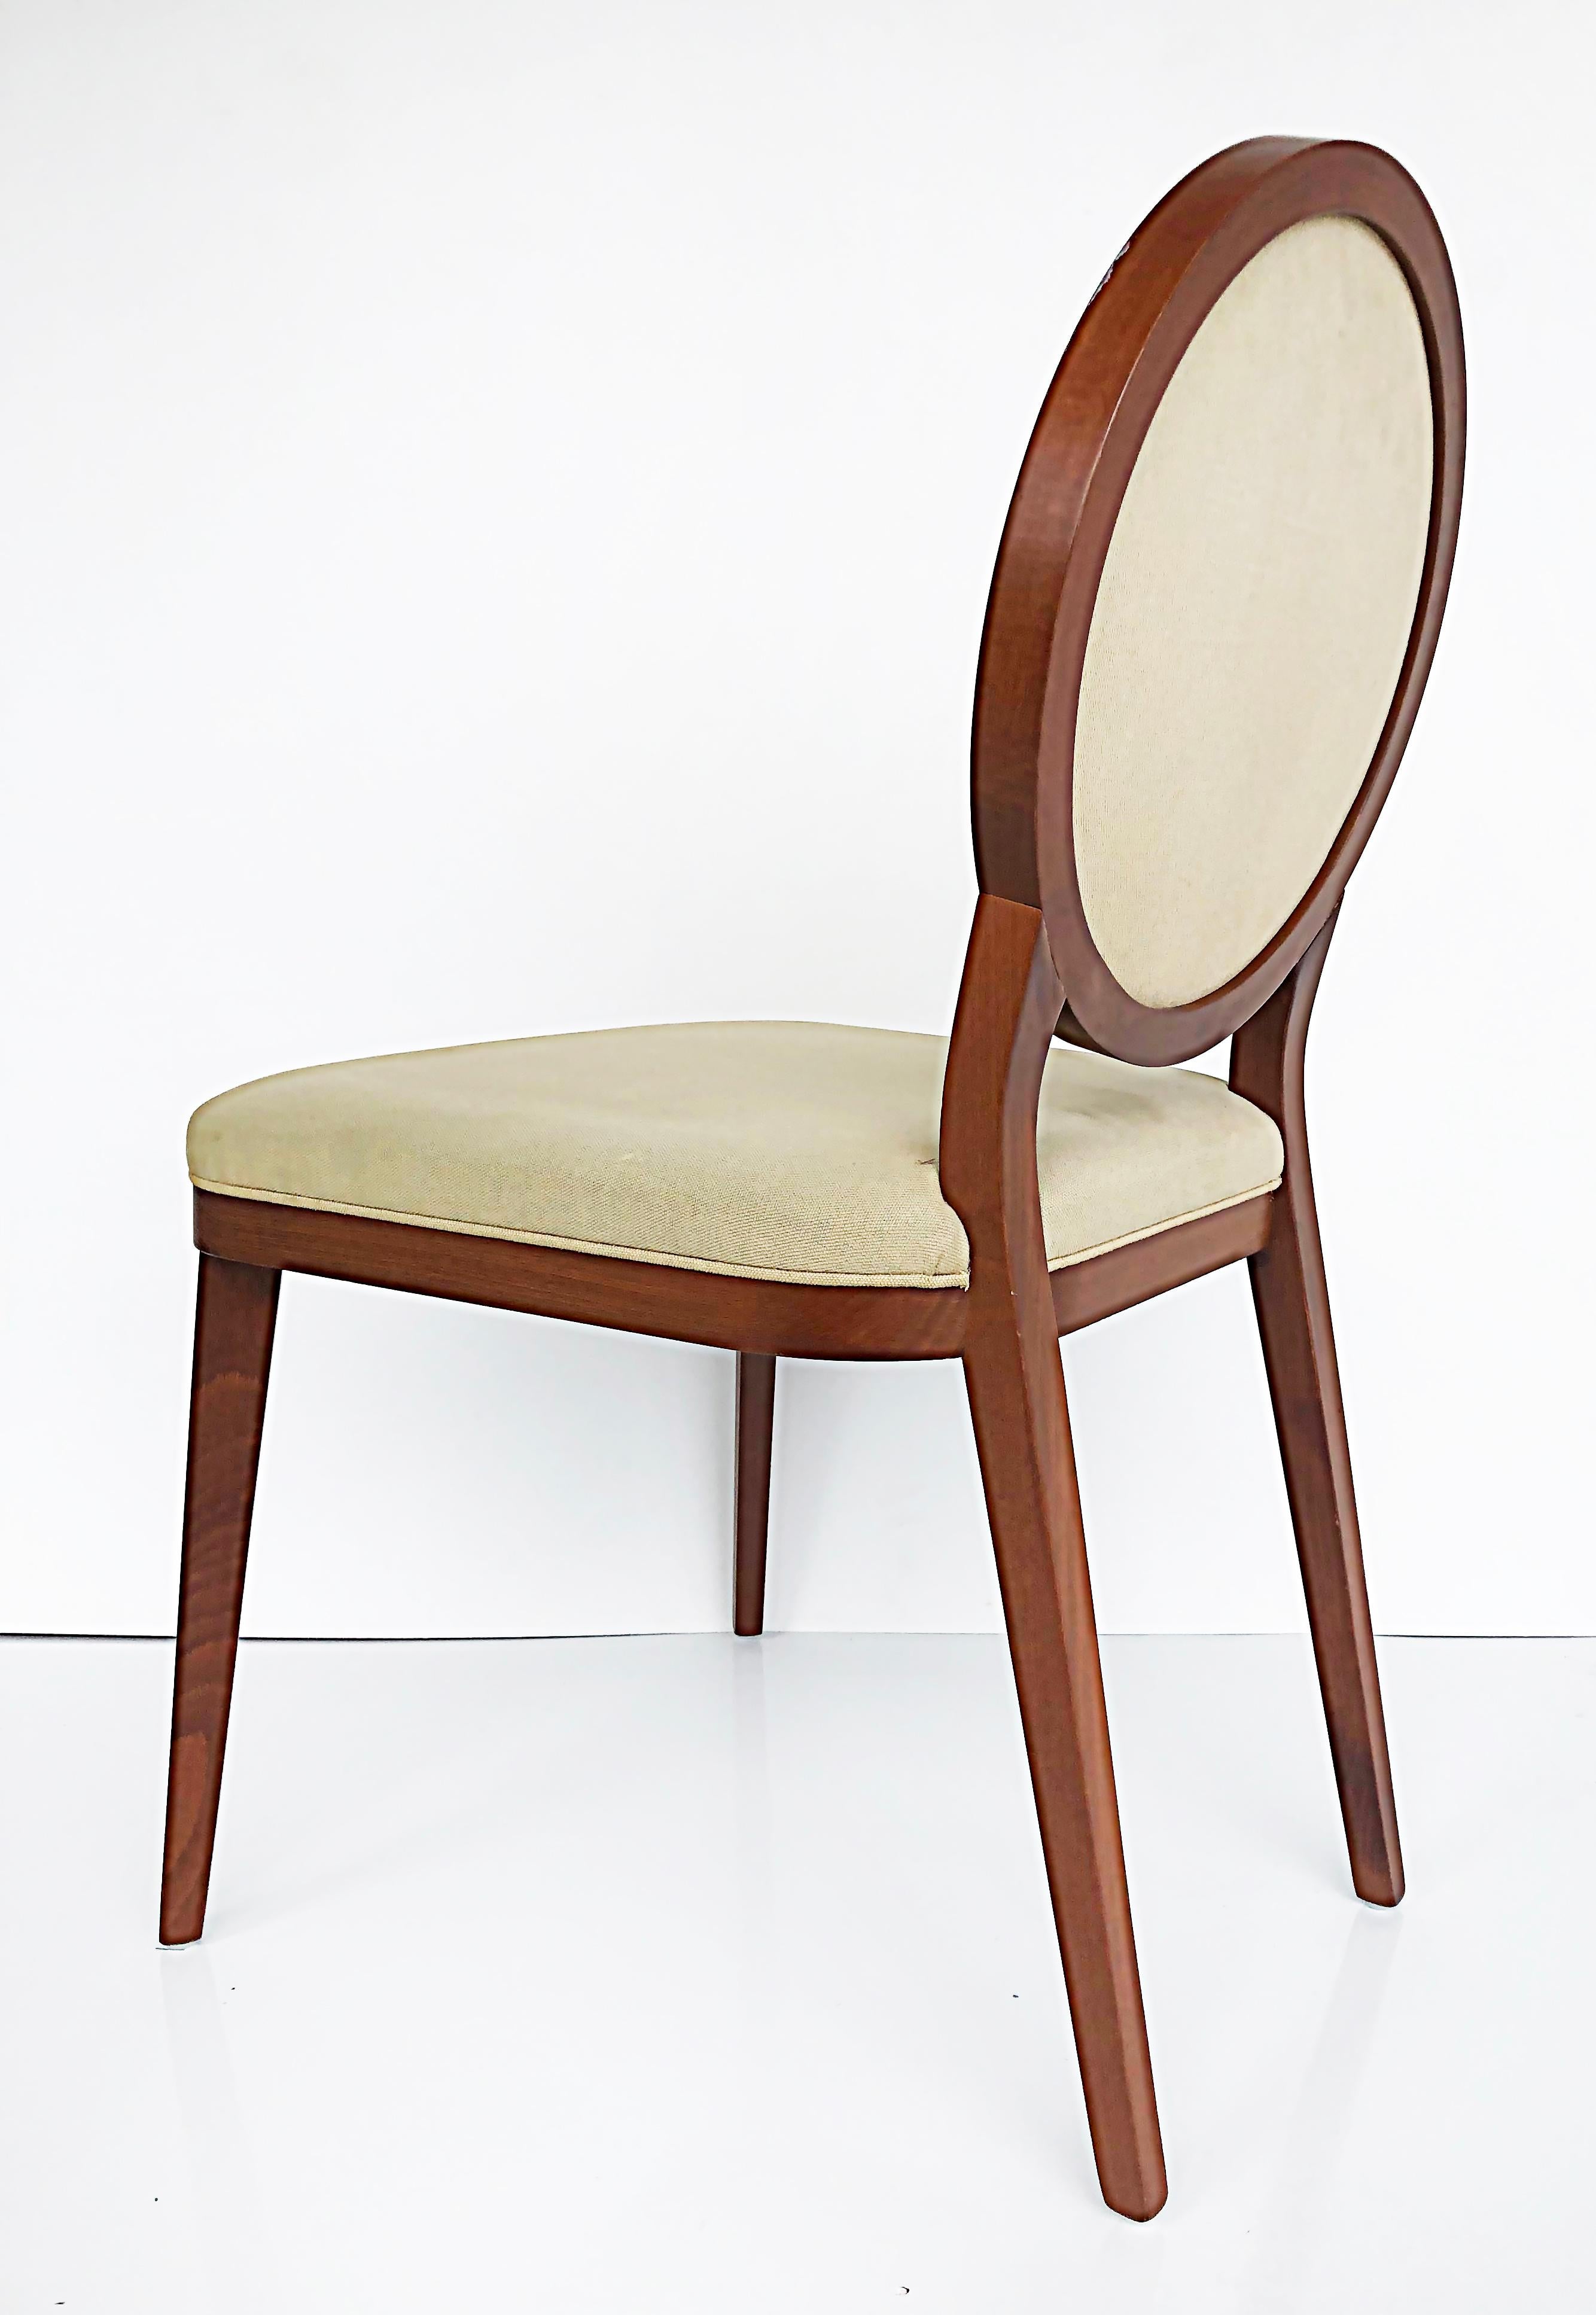 Bross Studio Riforma Italy Art Deco Style Beech Wood Chairs, Set of 6 1